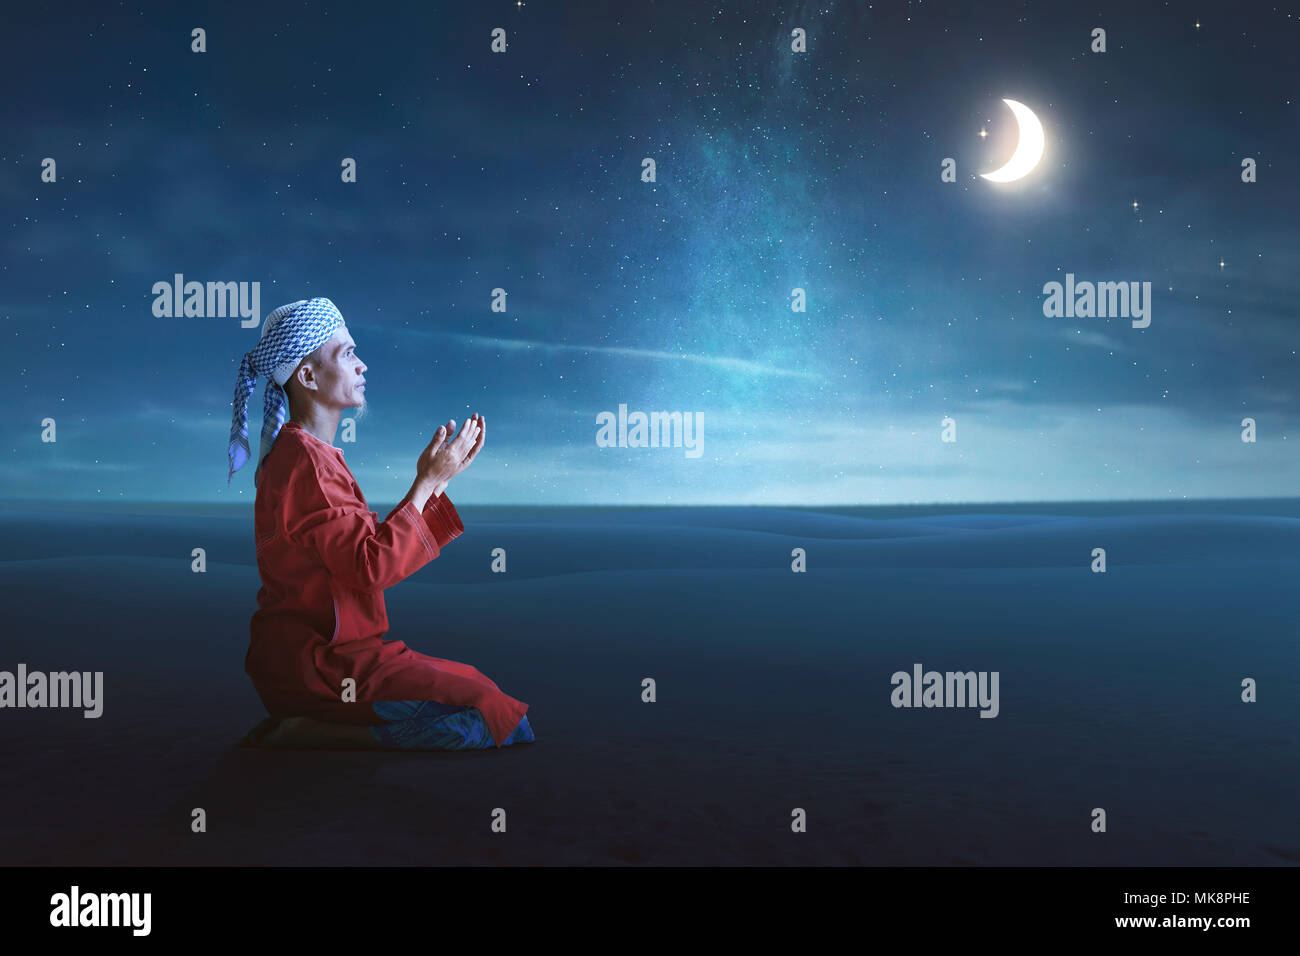 Religious asian muslim man pray to god with night scene background Stock Photo